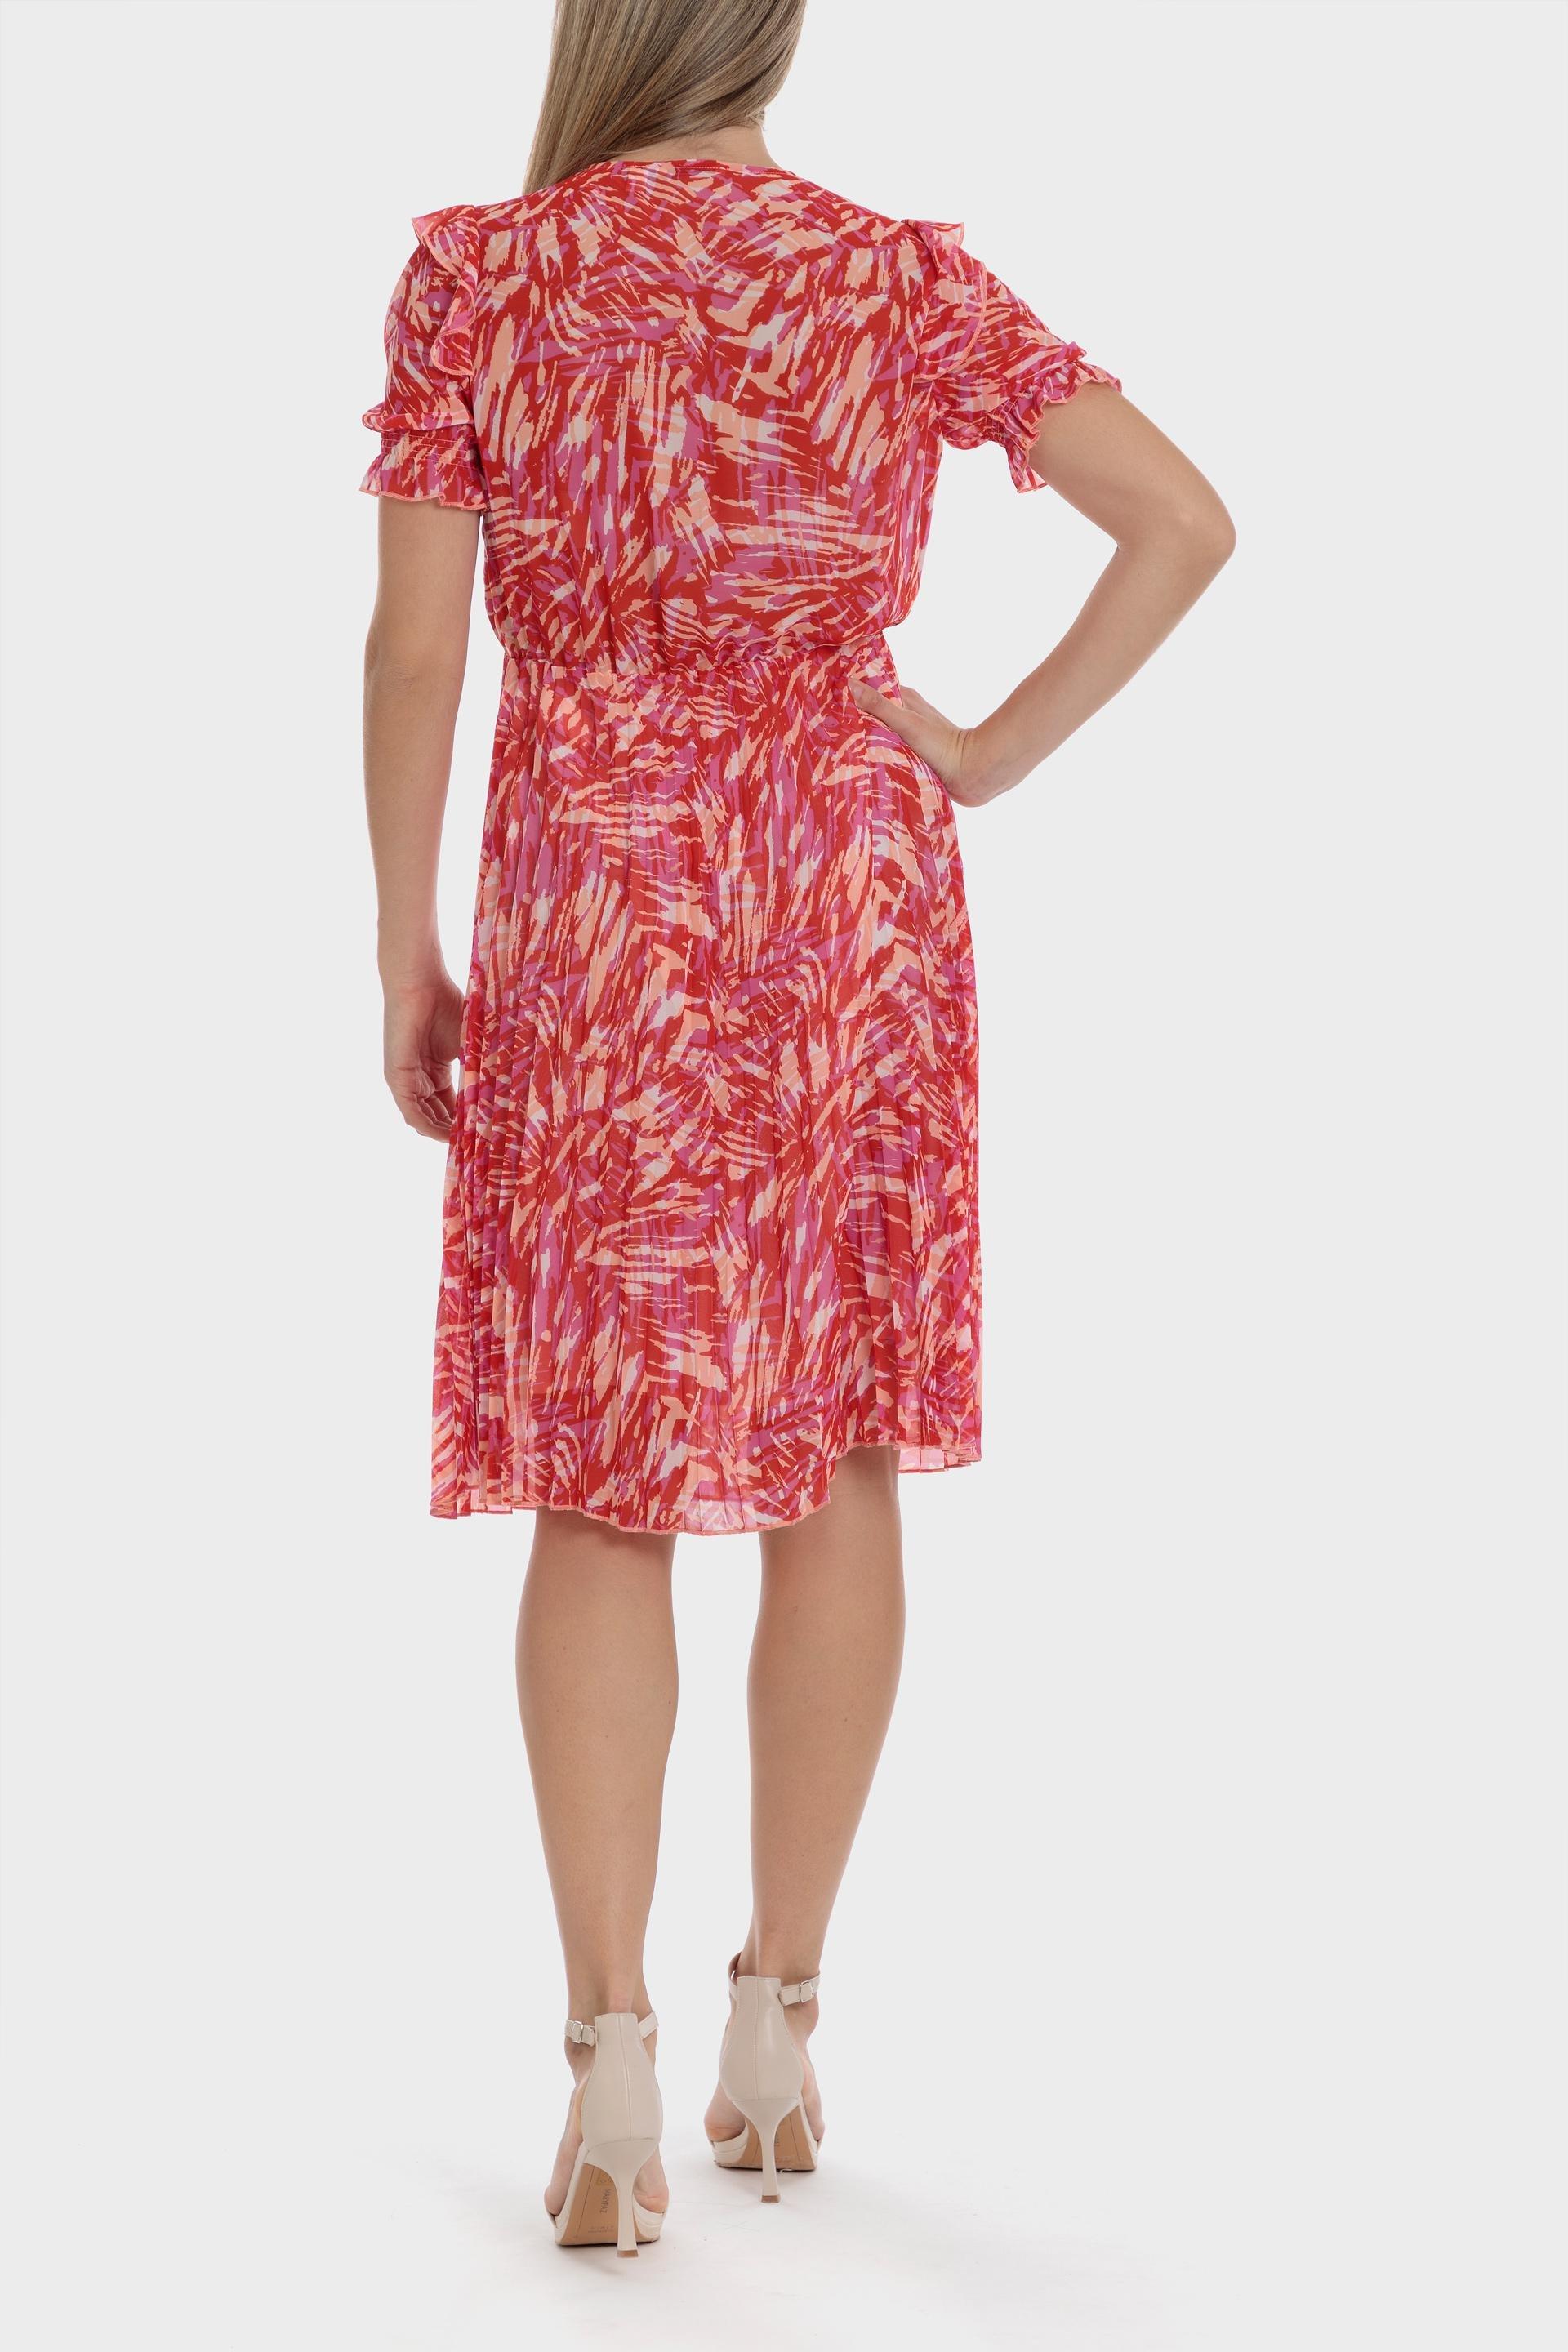 Punt Roma - Red Printed Dress